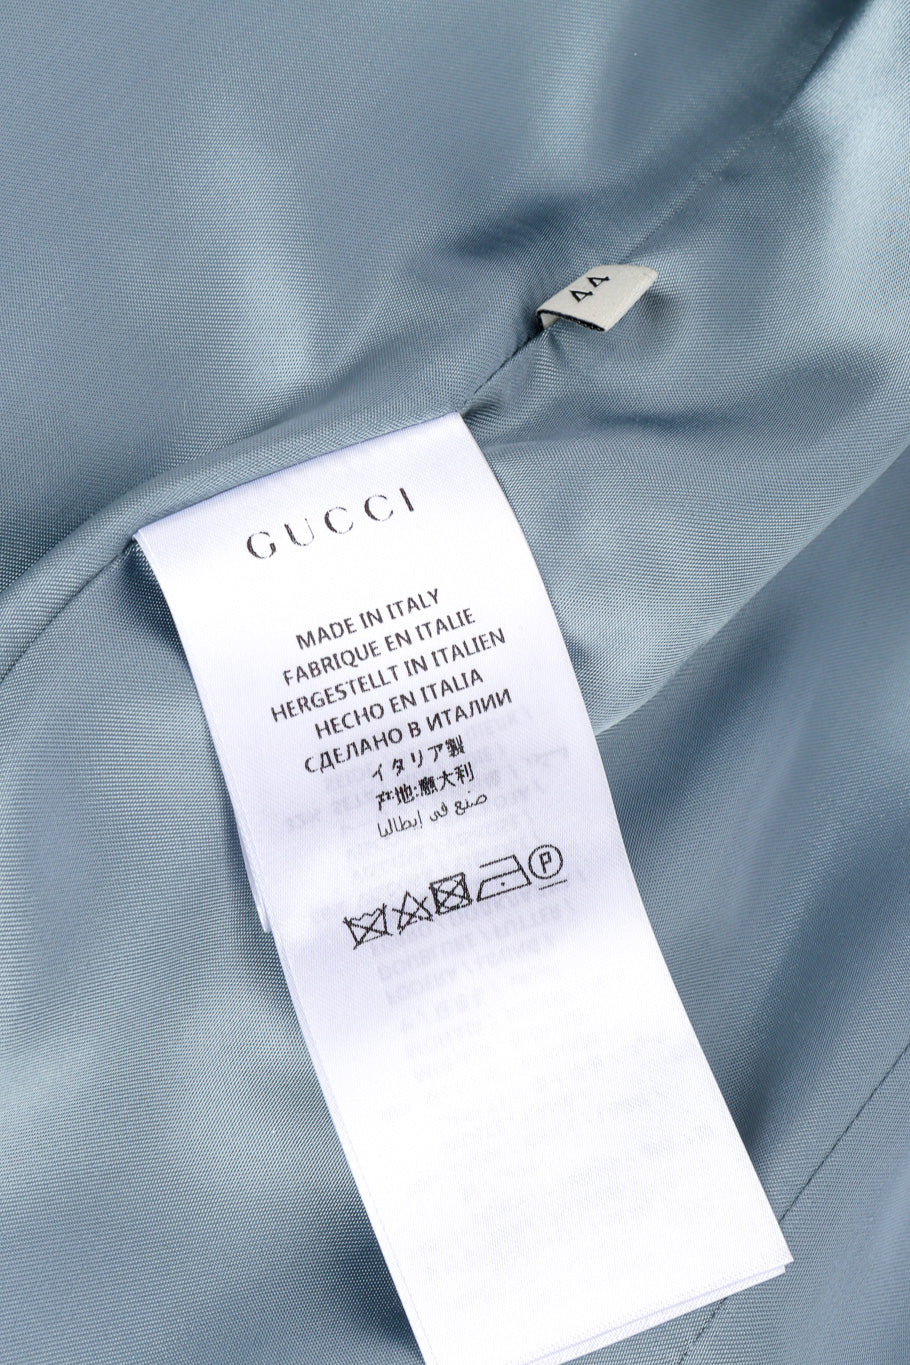 Floral Vest by Gucci fabric tag @recessla